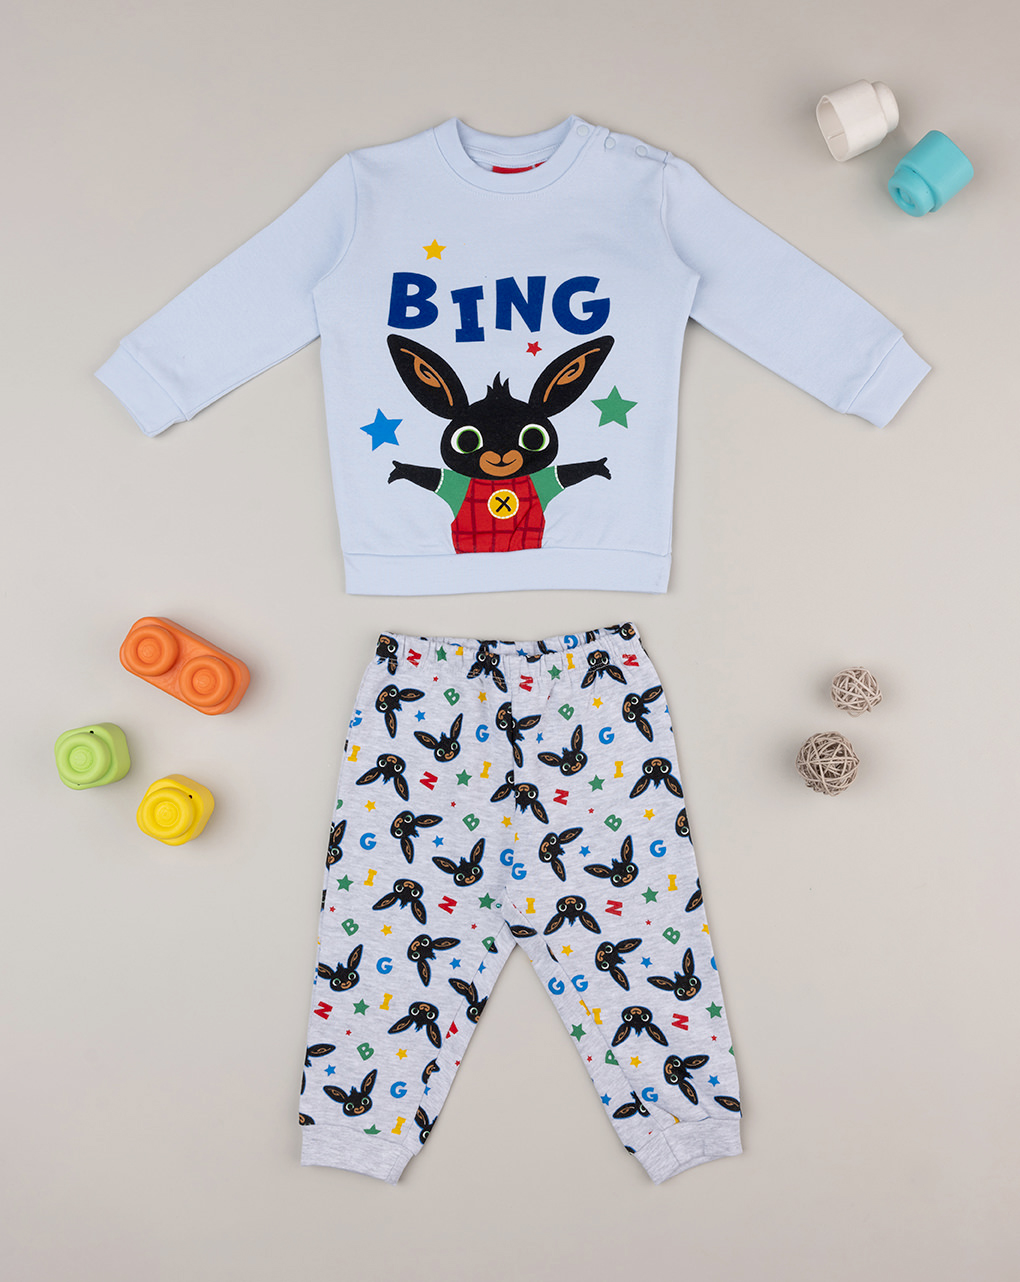 Bing pijama bebé azul claro - Prénatal